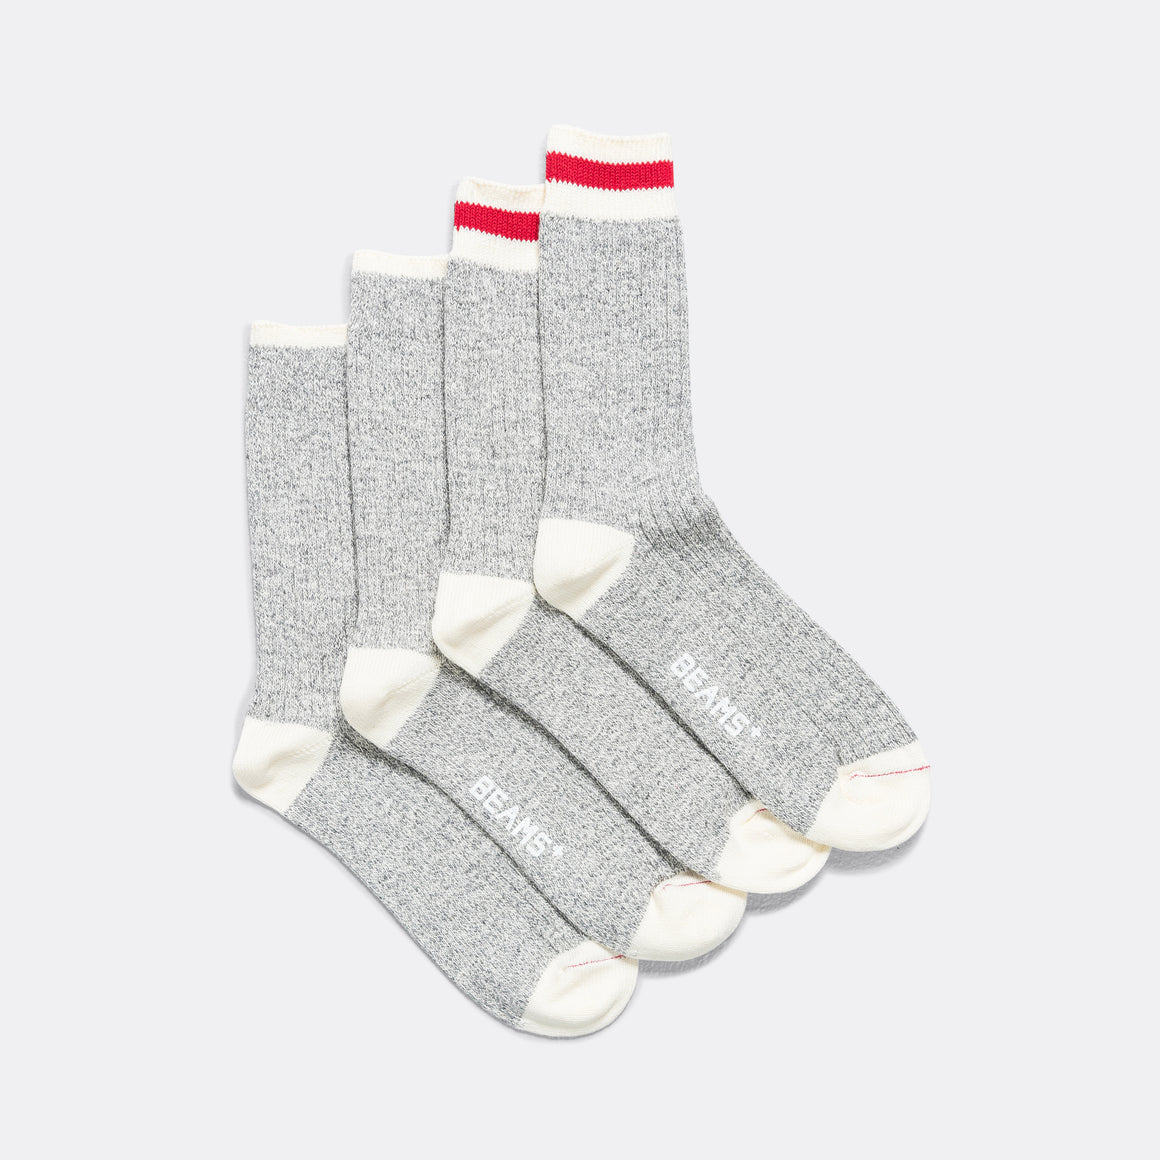 Beams Plus - Rag Socks - Grey/Red - UP THERE